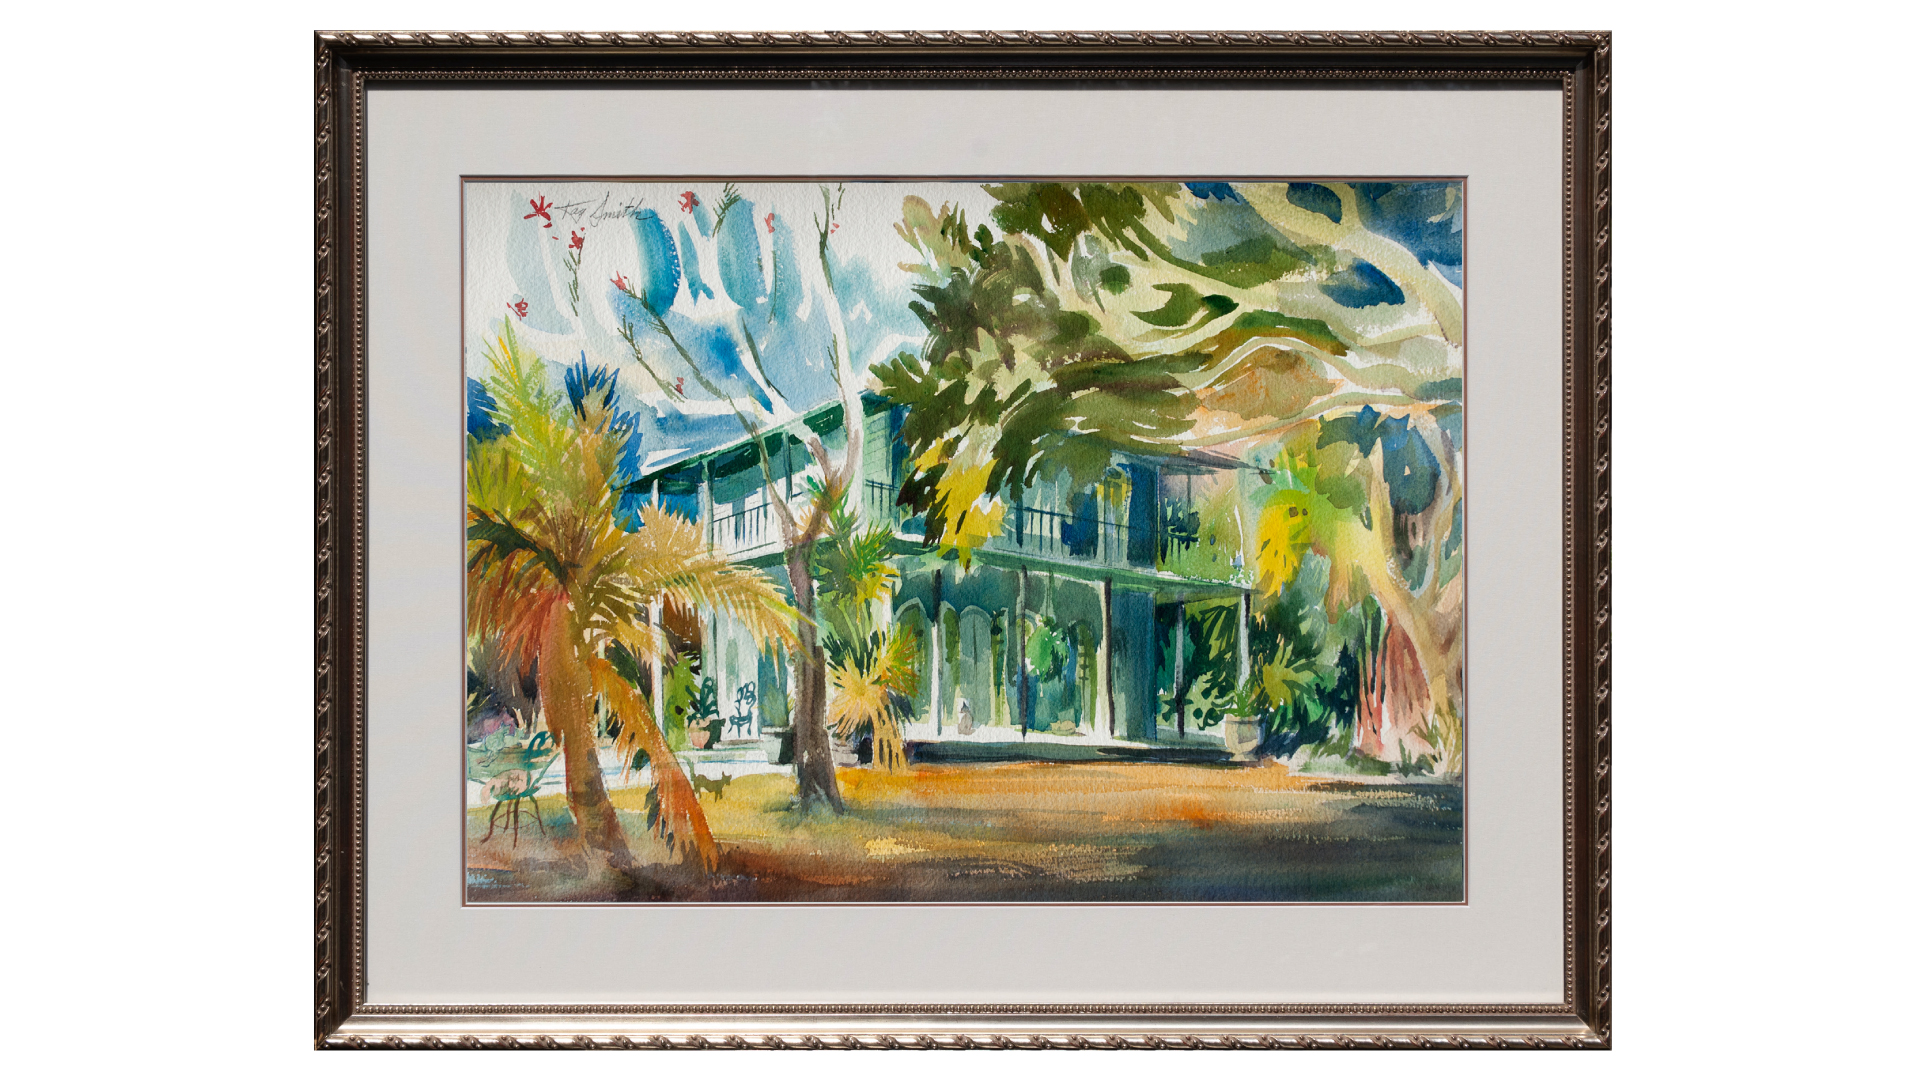 Hemingway Home Hemingway Home in Key West  22h x 28w Framed	$2,800  Key West, Florida